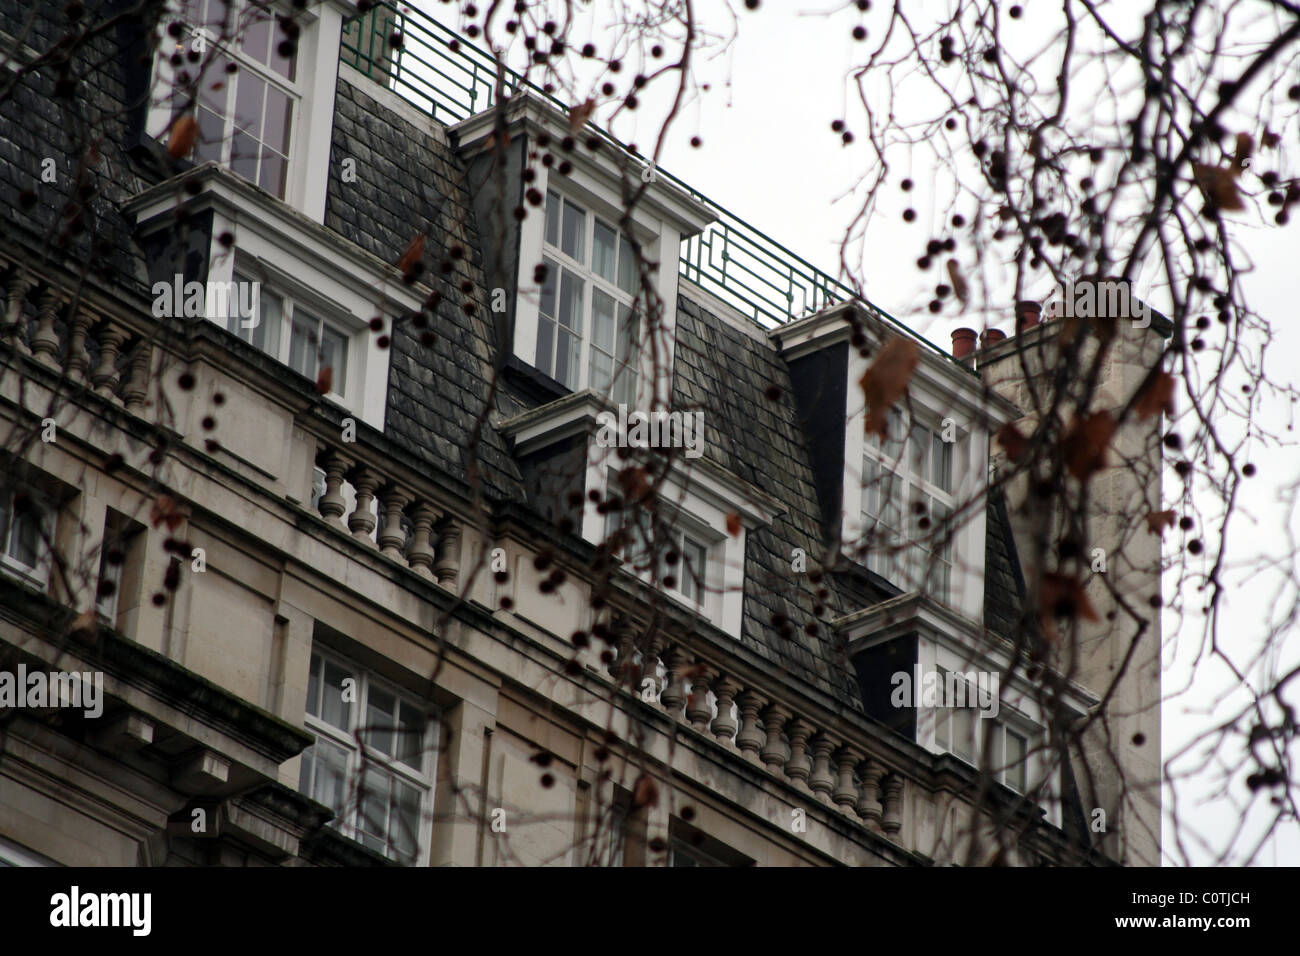 Dormer windows of building in Lincoln's Inn Fields, City of London area of London, England, UK Stock Photo